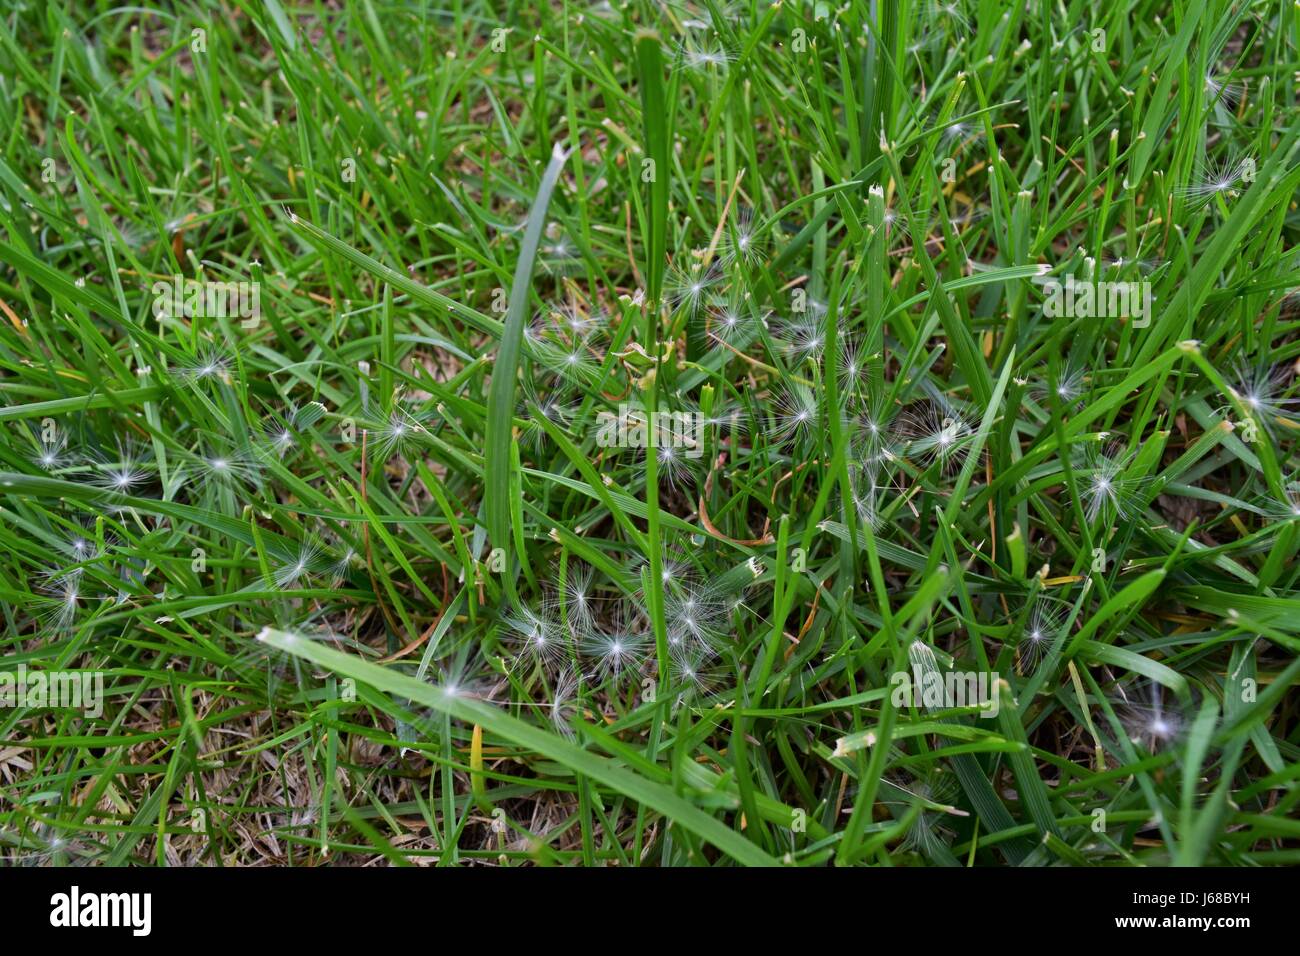 Dandelion Puffball hairs on grass Stock Photo